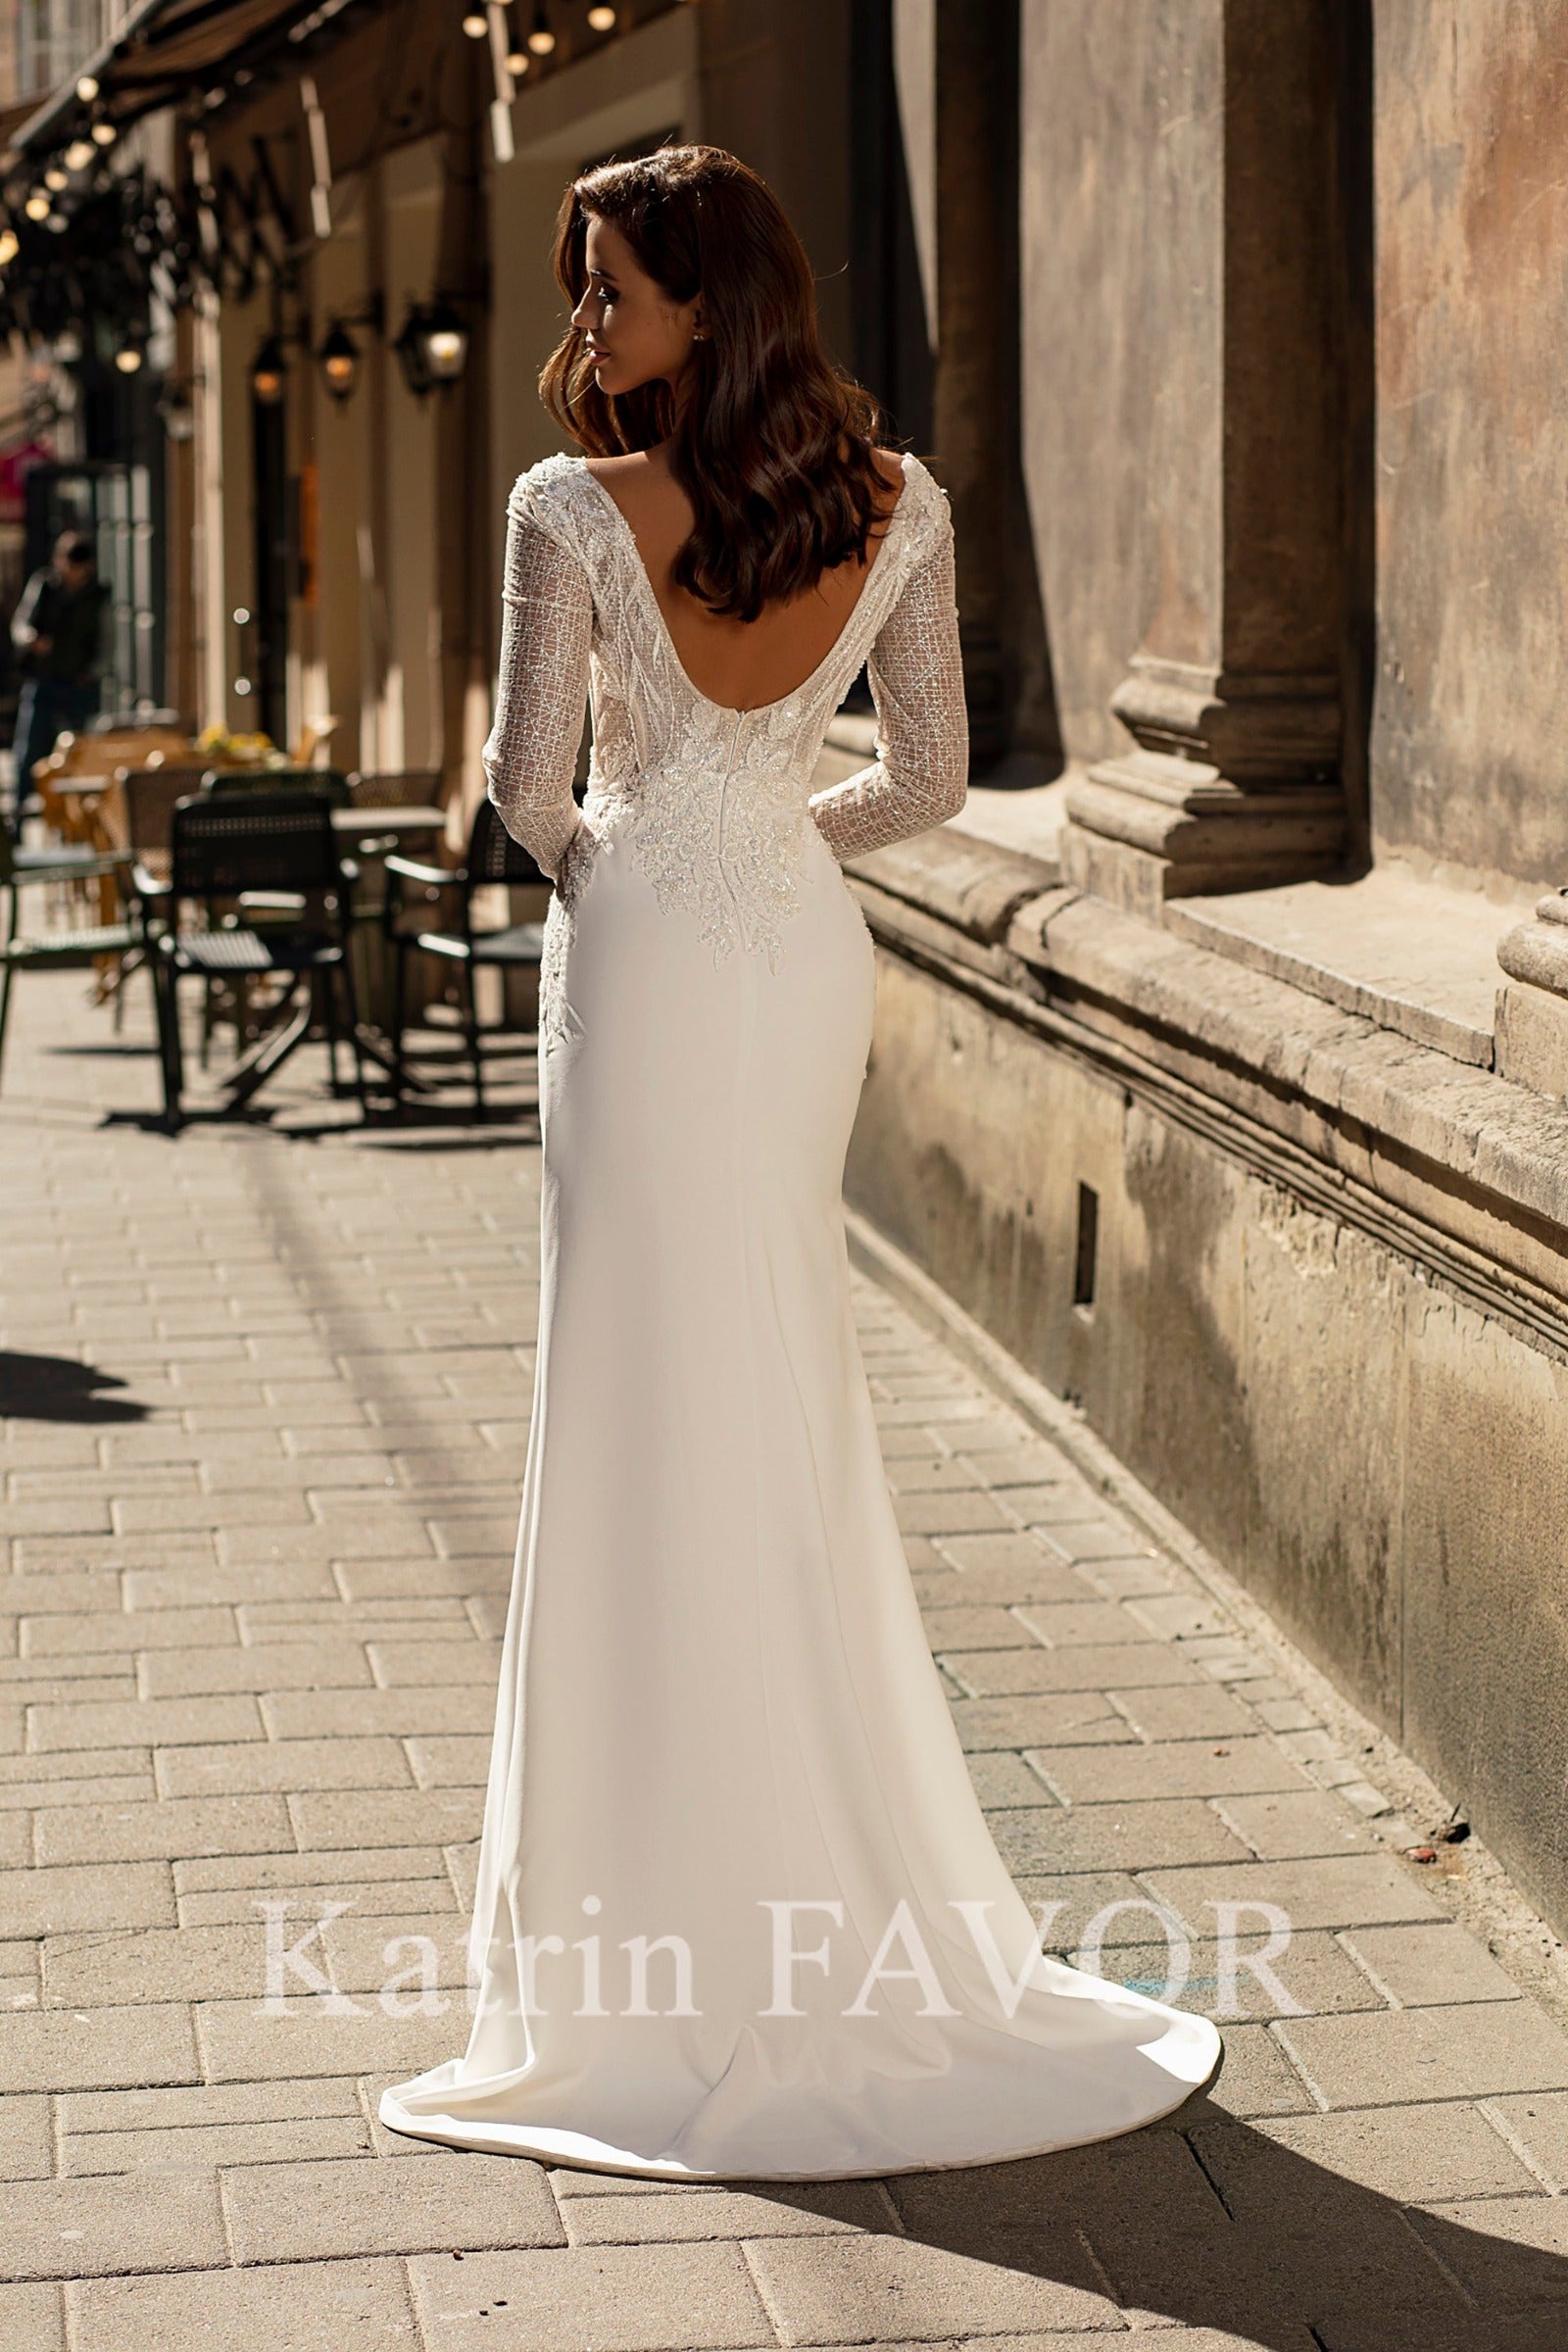 KatrinFAVORboutique-Long sleeve sheath crepe wedding dress